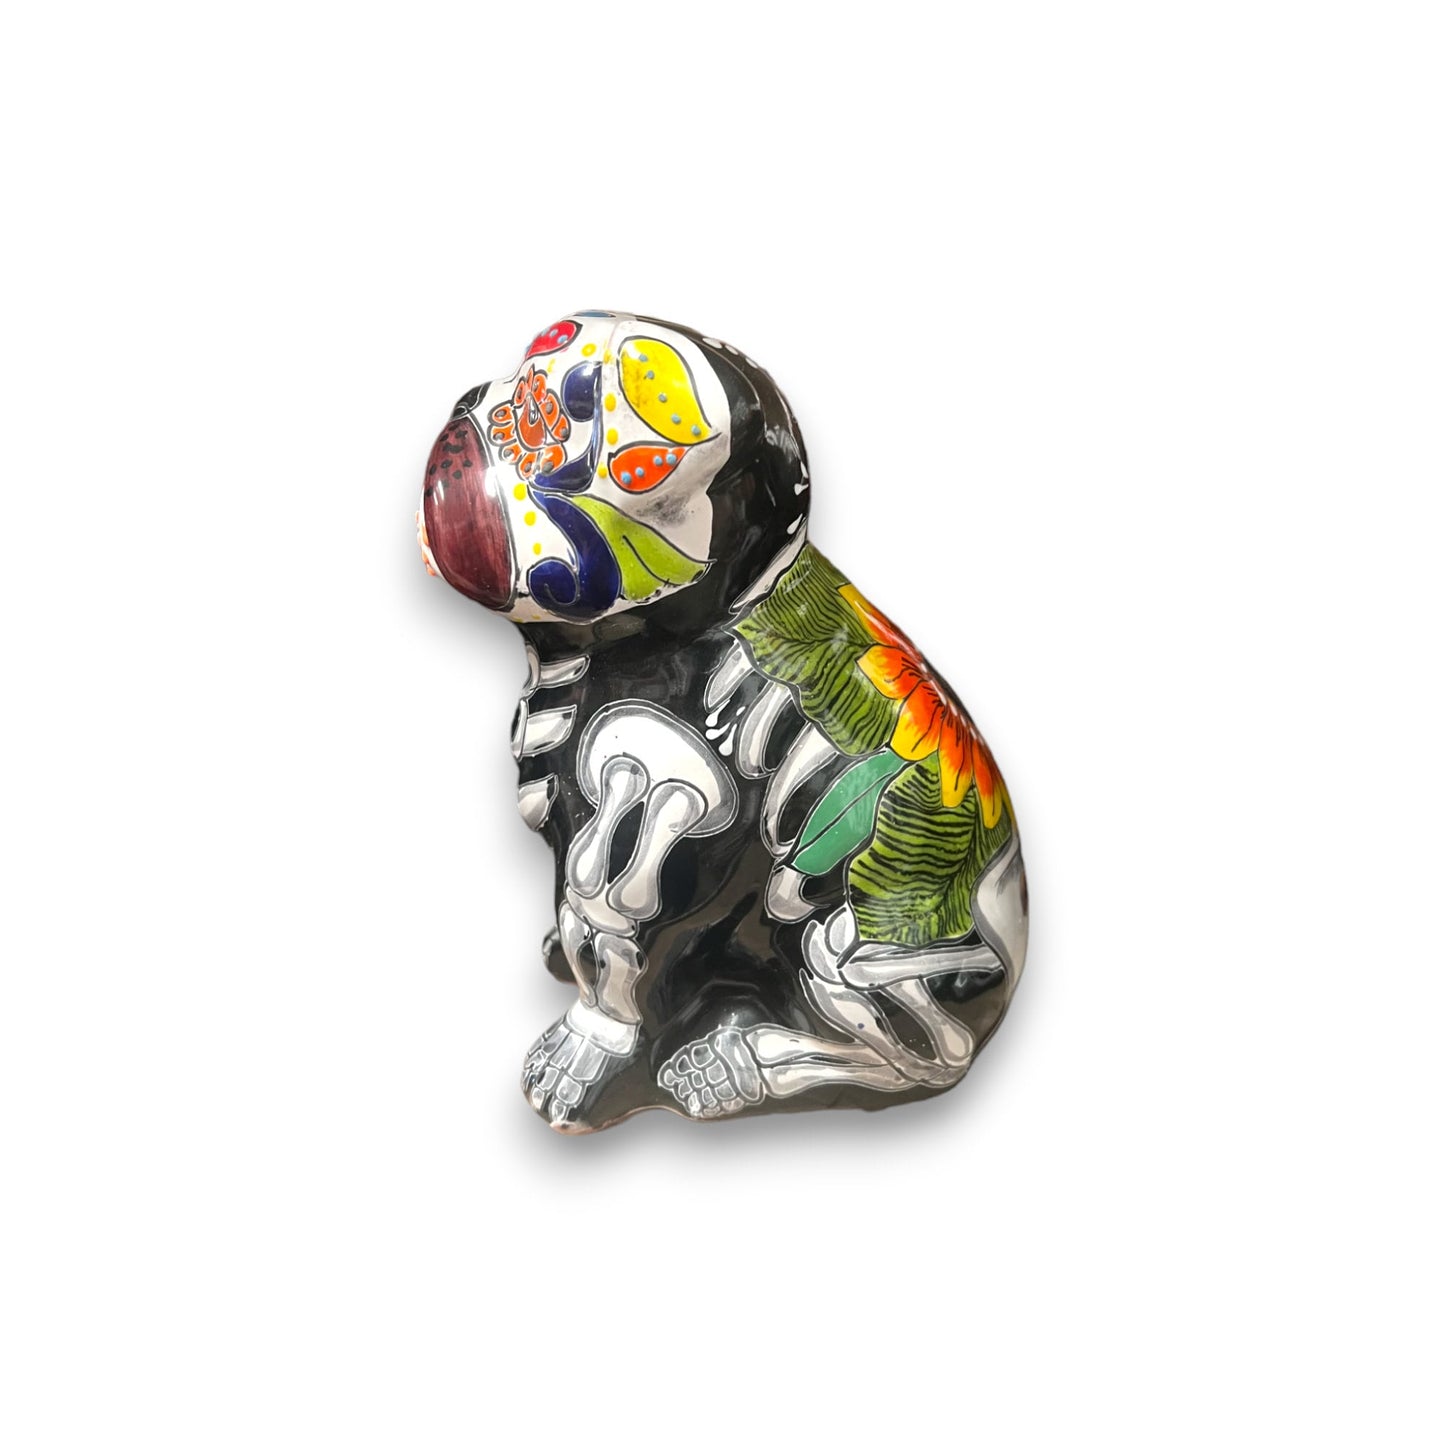 Handmade Talavera Pug Figurine | Colorful Day of the Dead Decor (Medium)